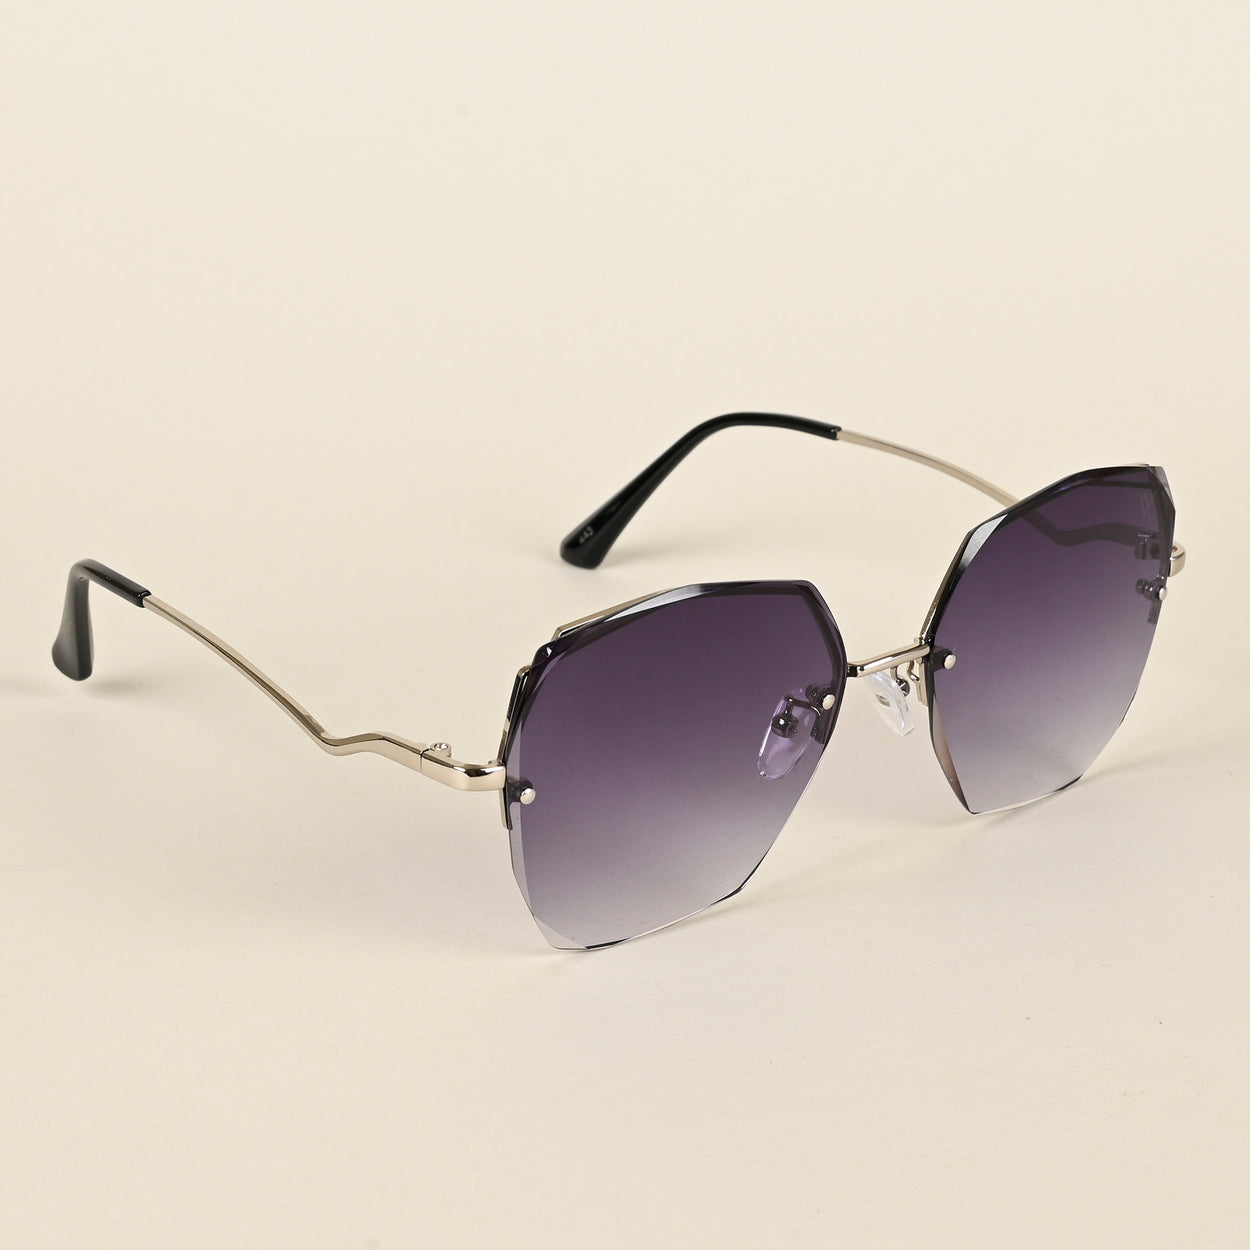 Voyage Purple Geometric Sunglasses for Women - MG4335